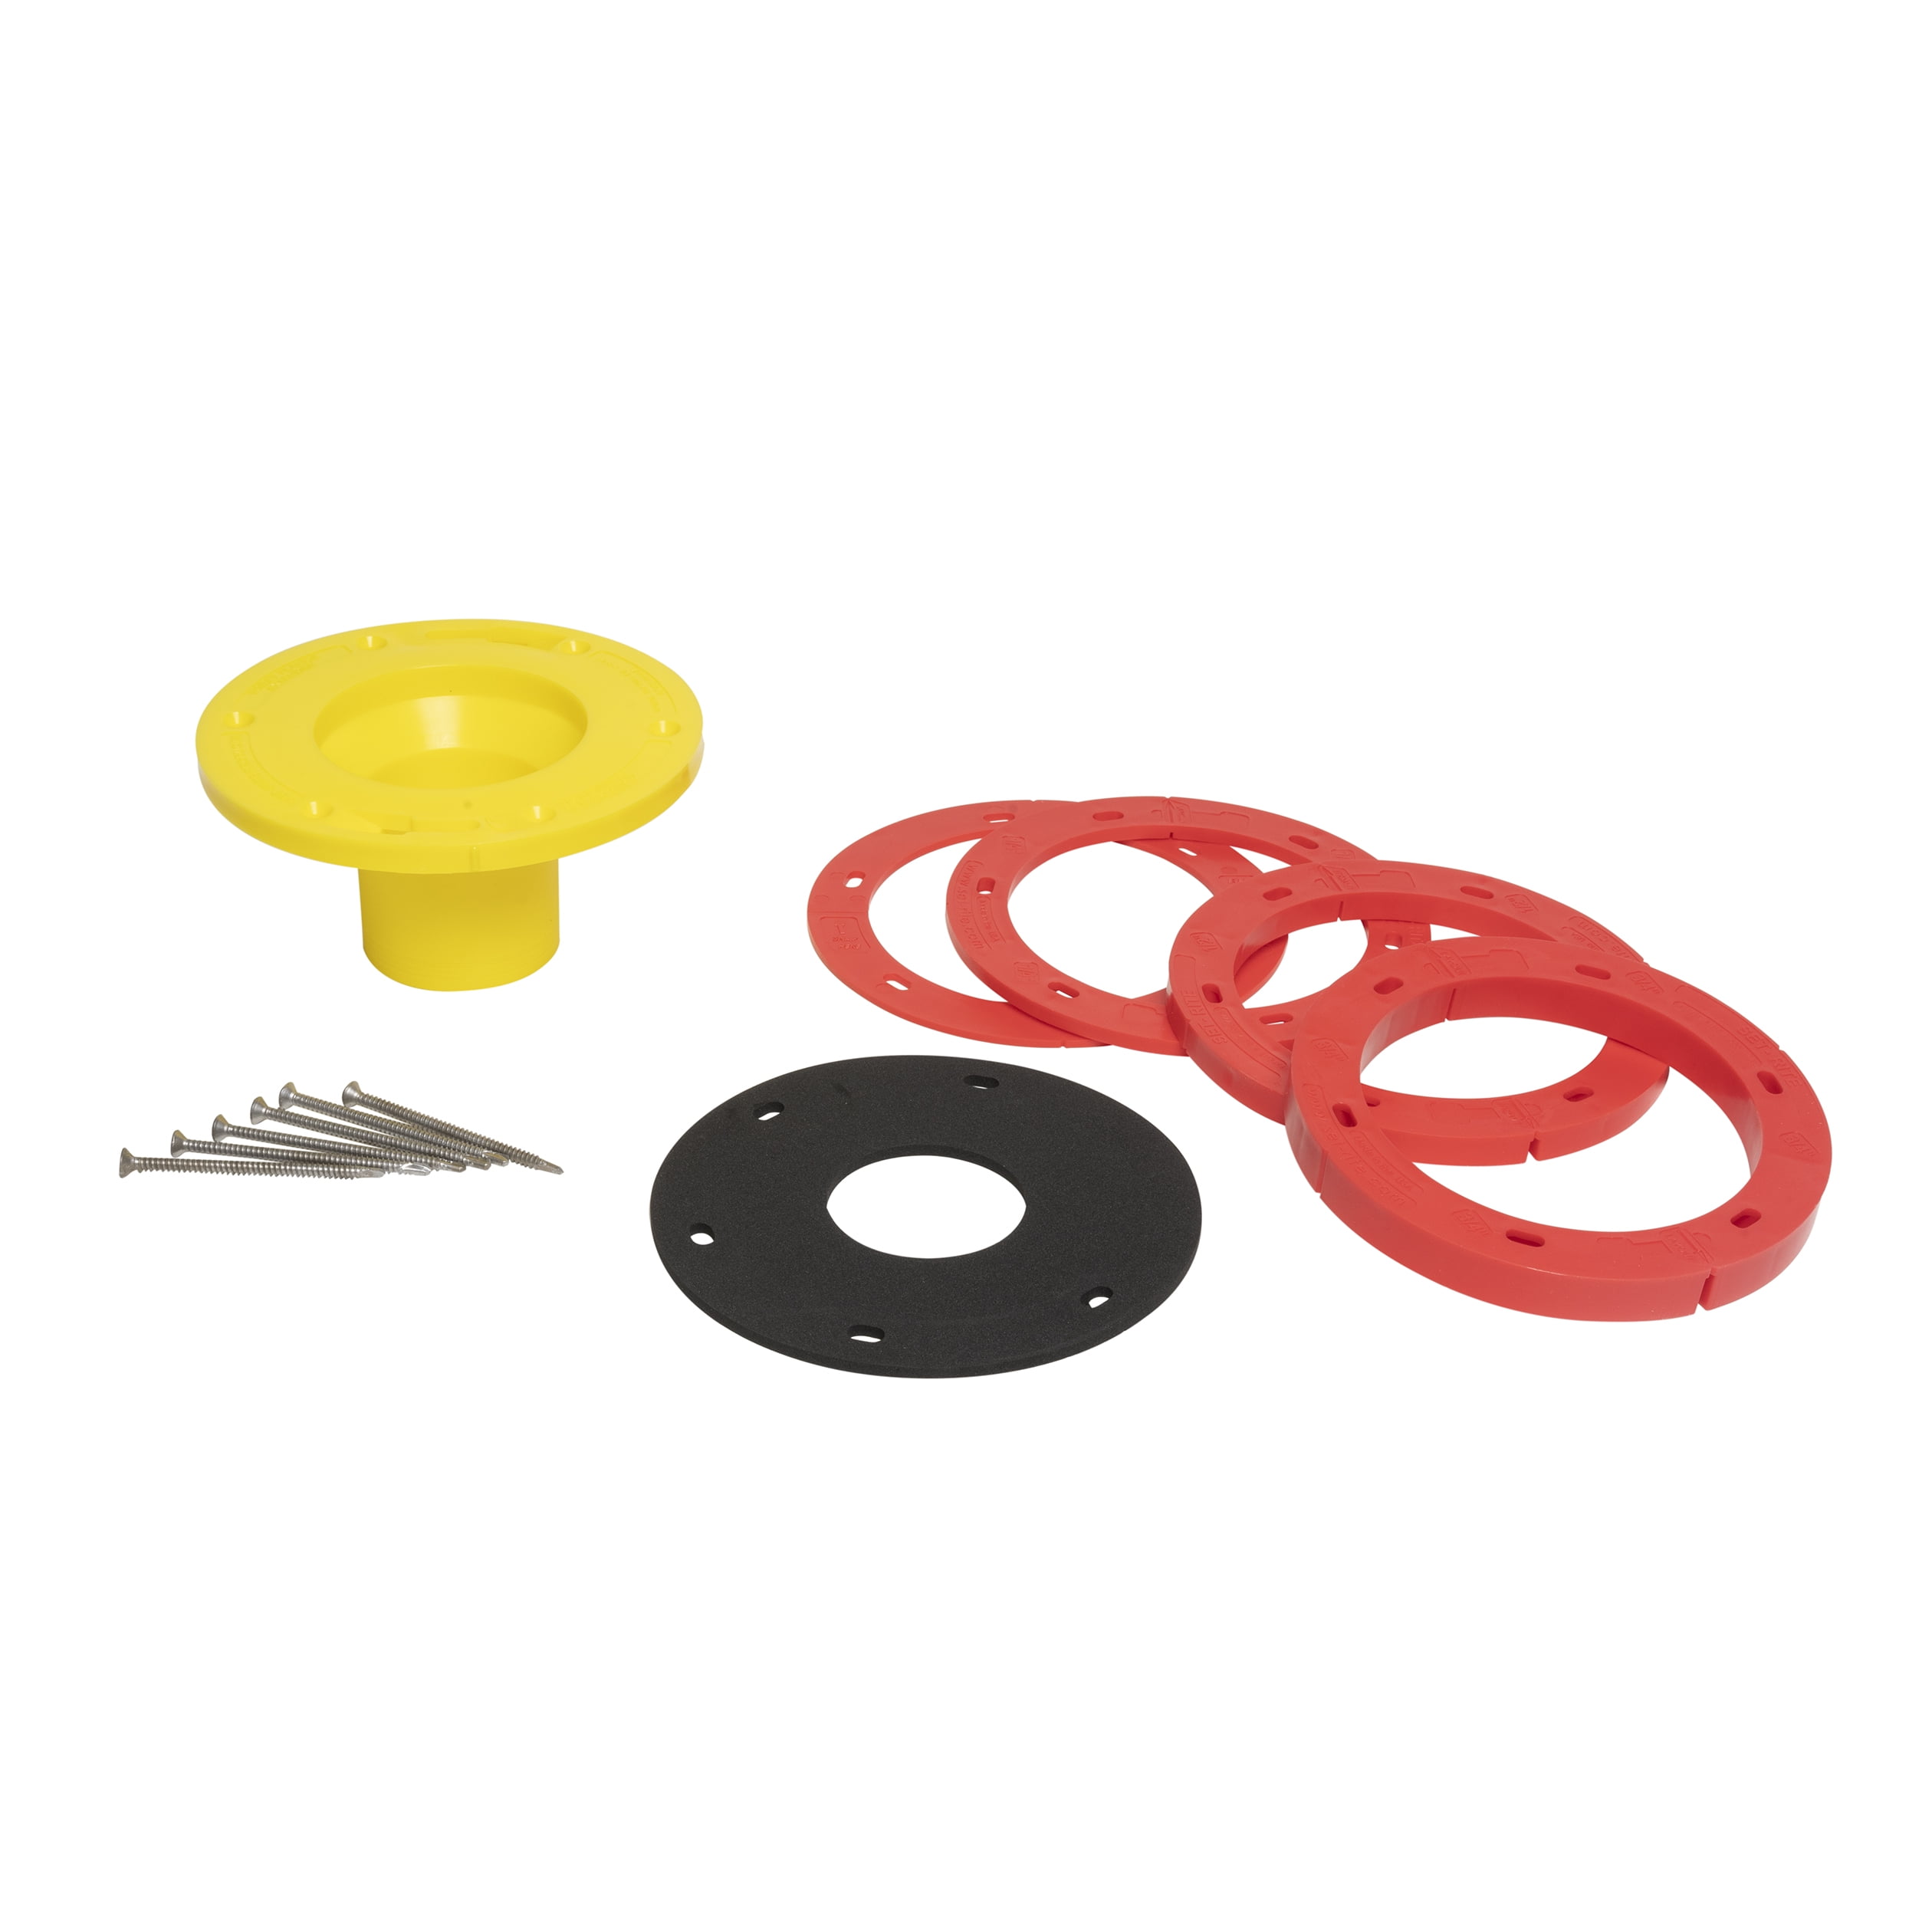 4535407 Set-rite Toilet Flange Extender Kit - Red & Yellow